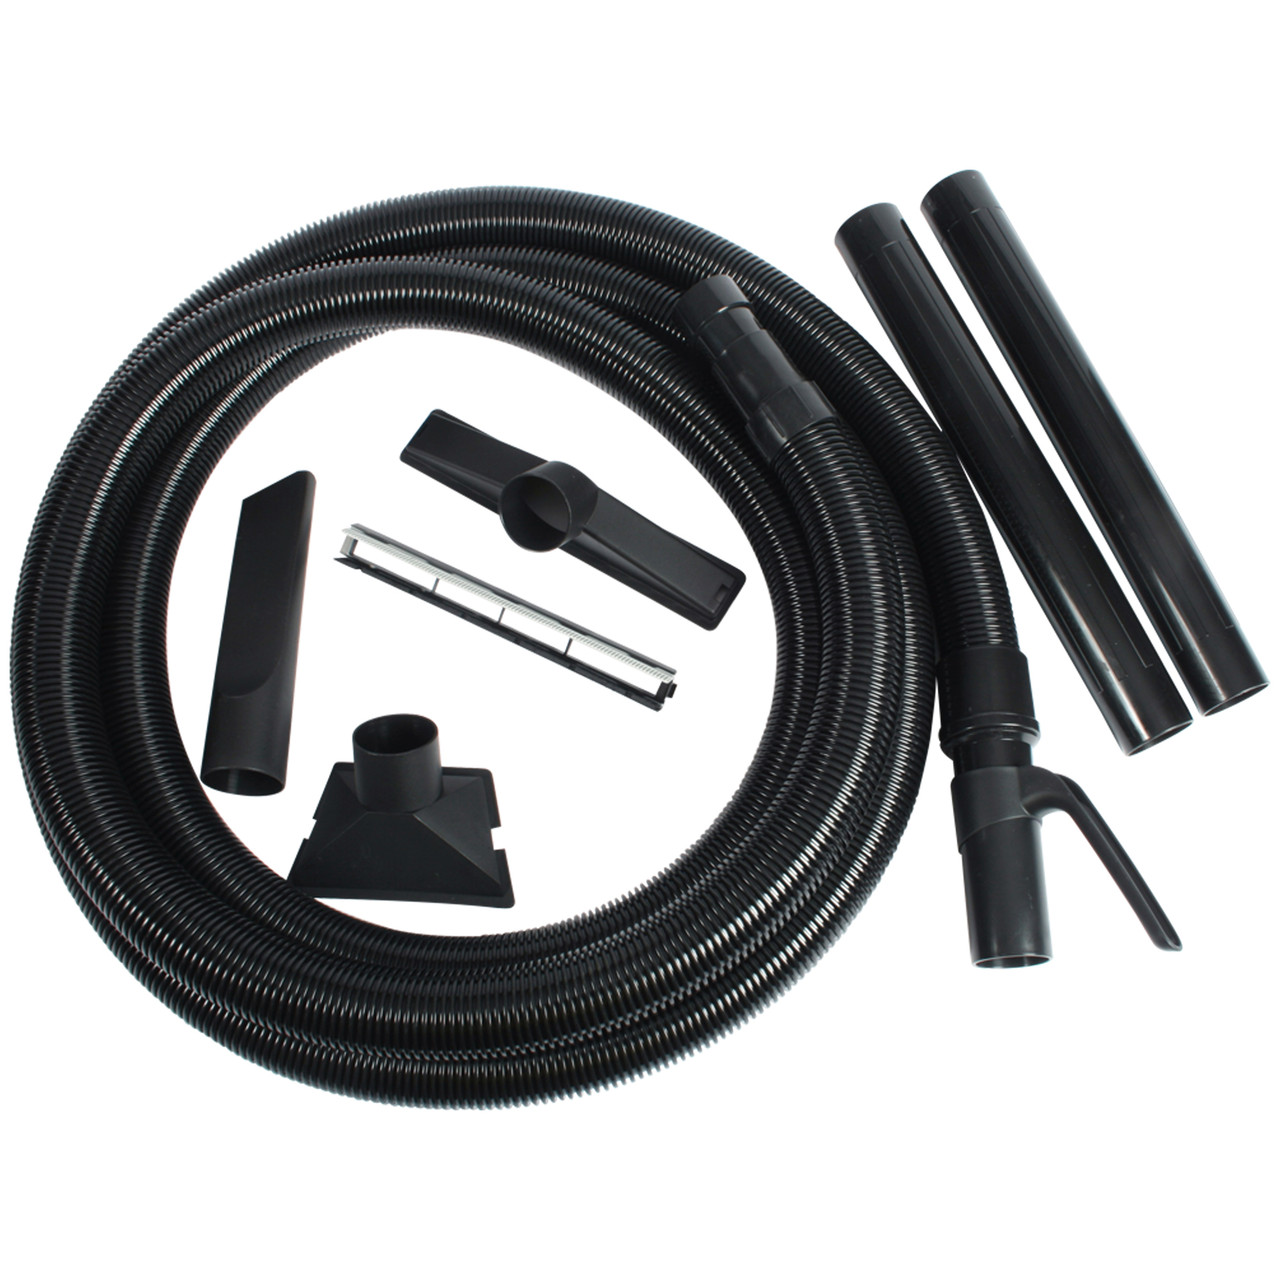 For Numatic Henry Hetty Hoover Vacuum Cleaner Hose Pipe Tool Kit Set 2.5m Hose 